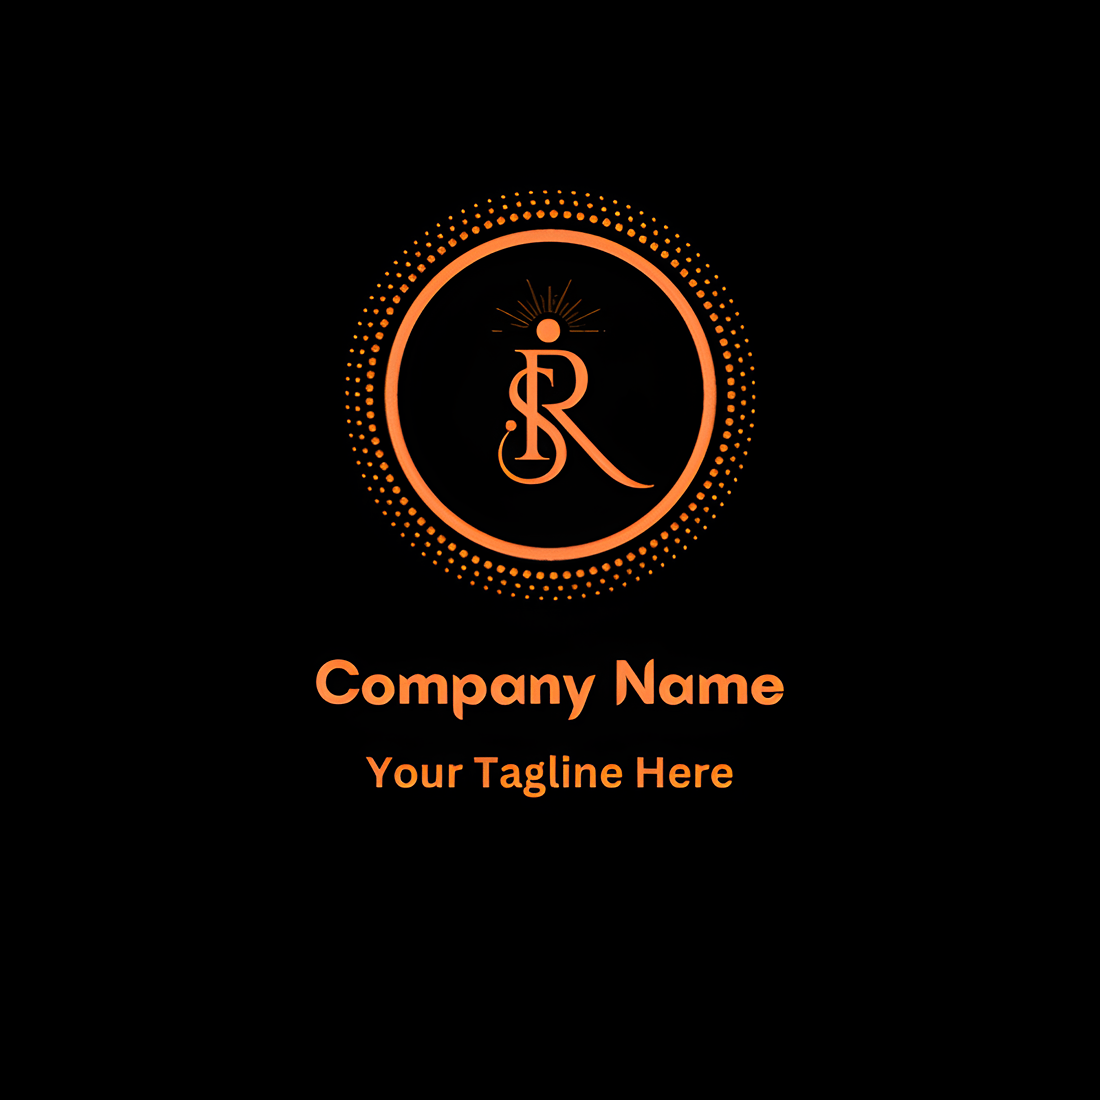 Letter R S - Logo Design Template, R S Logo vectors, icons, clipart graphics cover image.